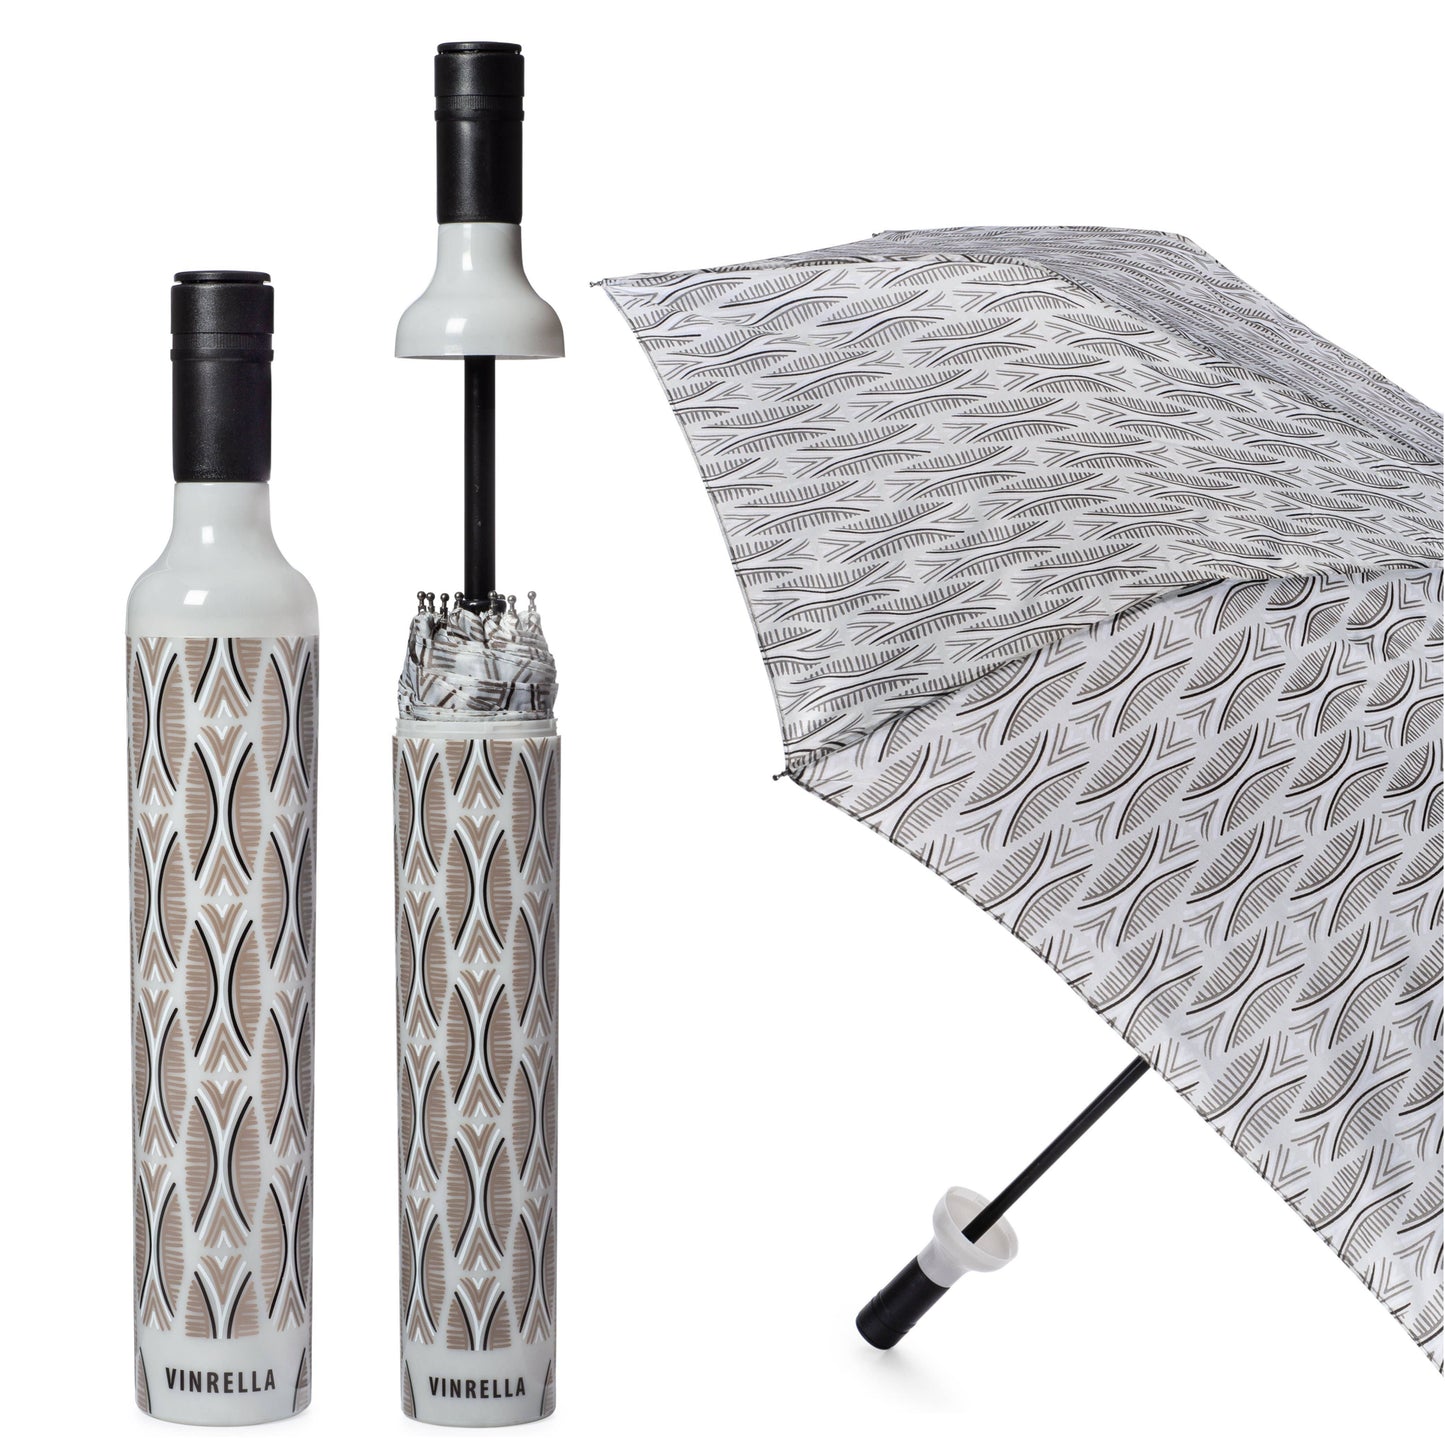 Vinrella - Savanna Bottle Umbrella